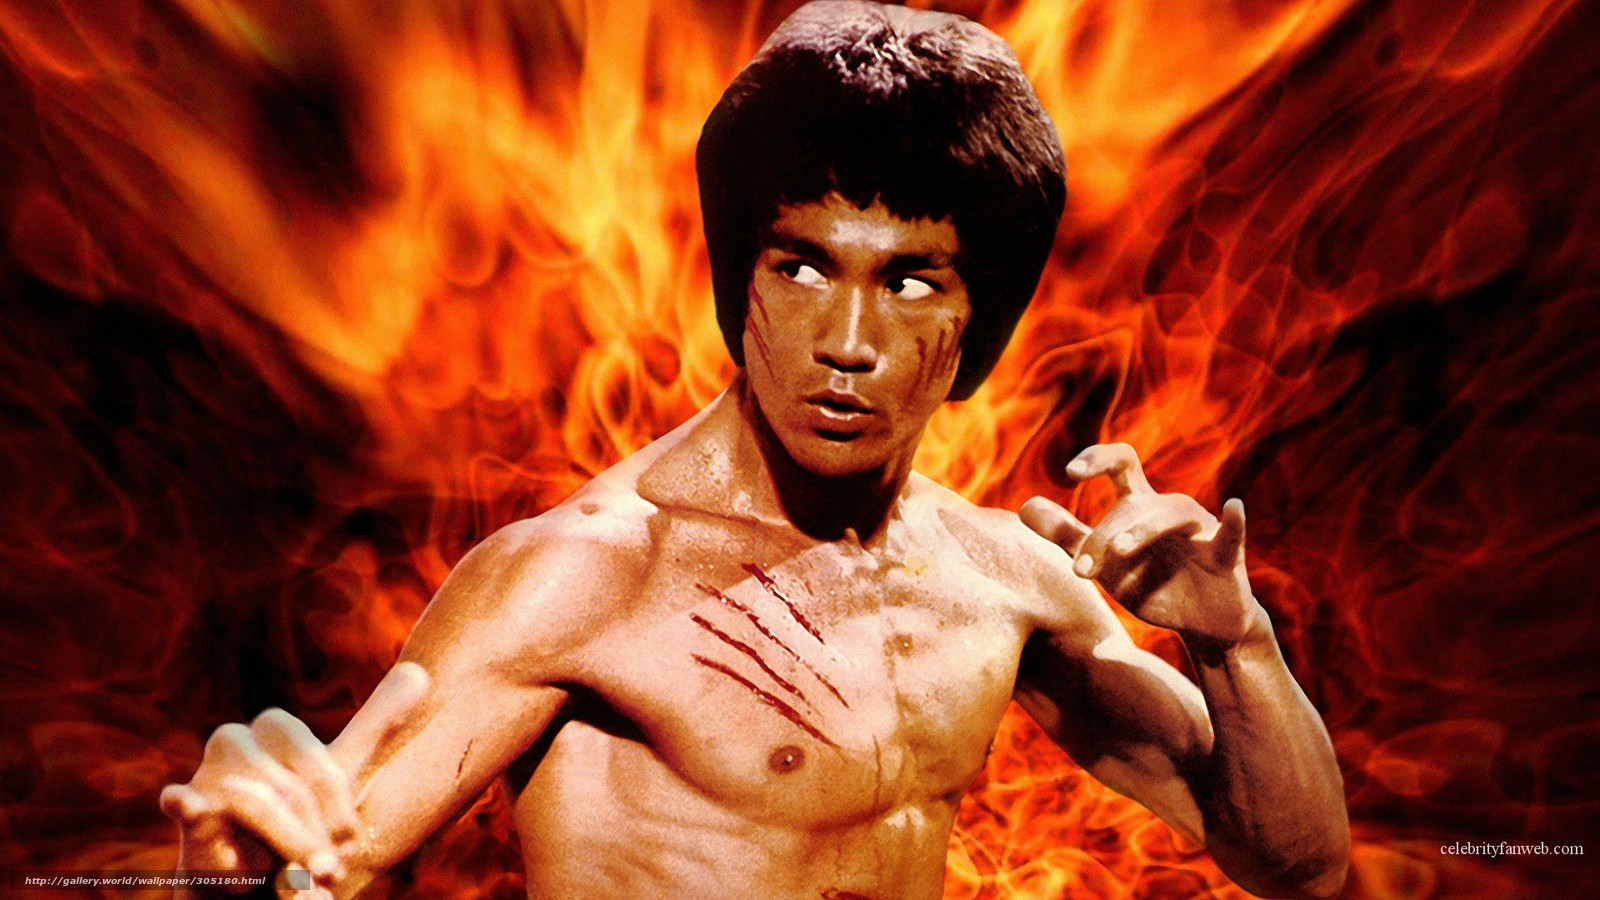 Download wallpaper Bruce Lee actor karate free desktop wallpaper in